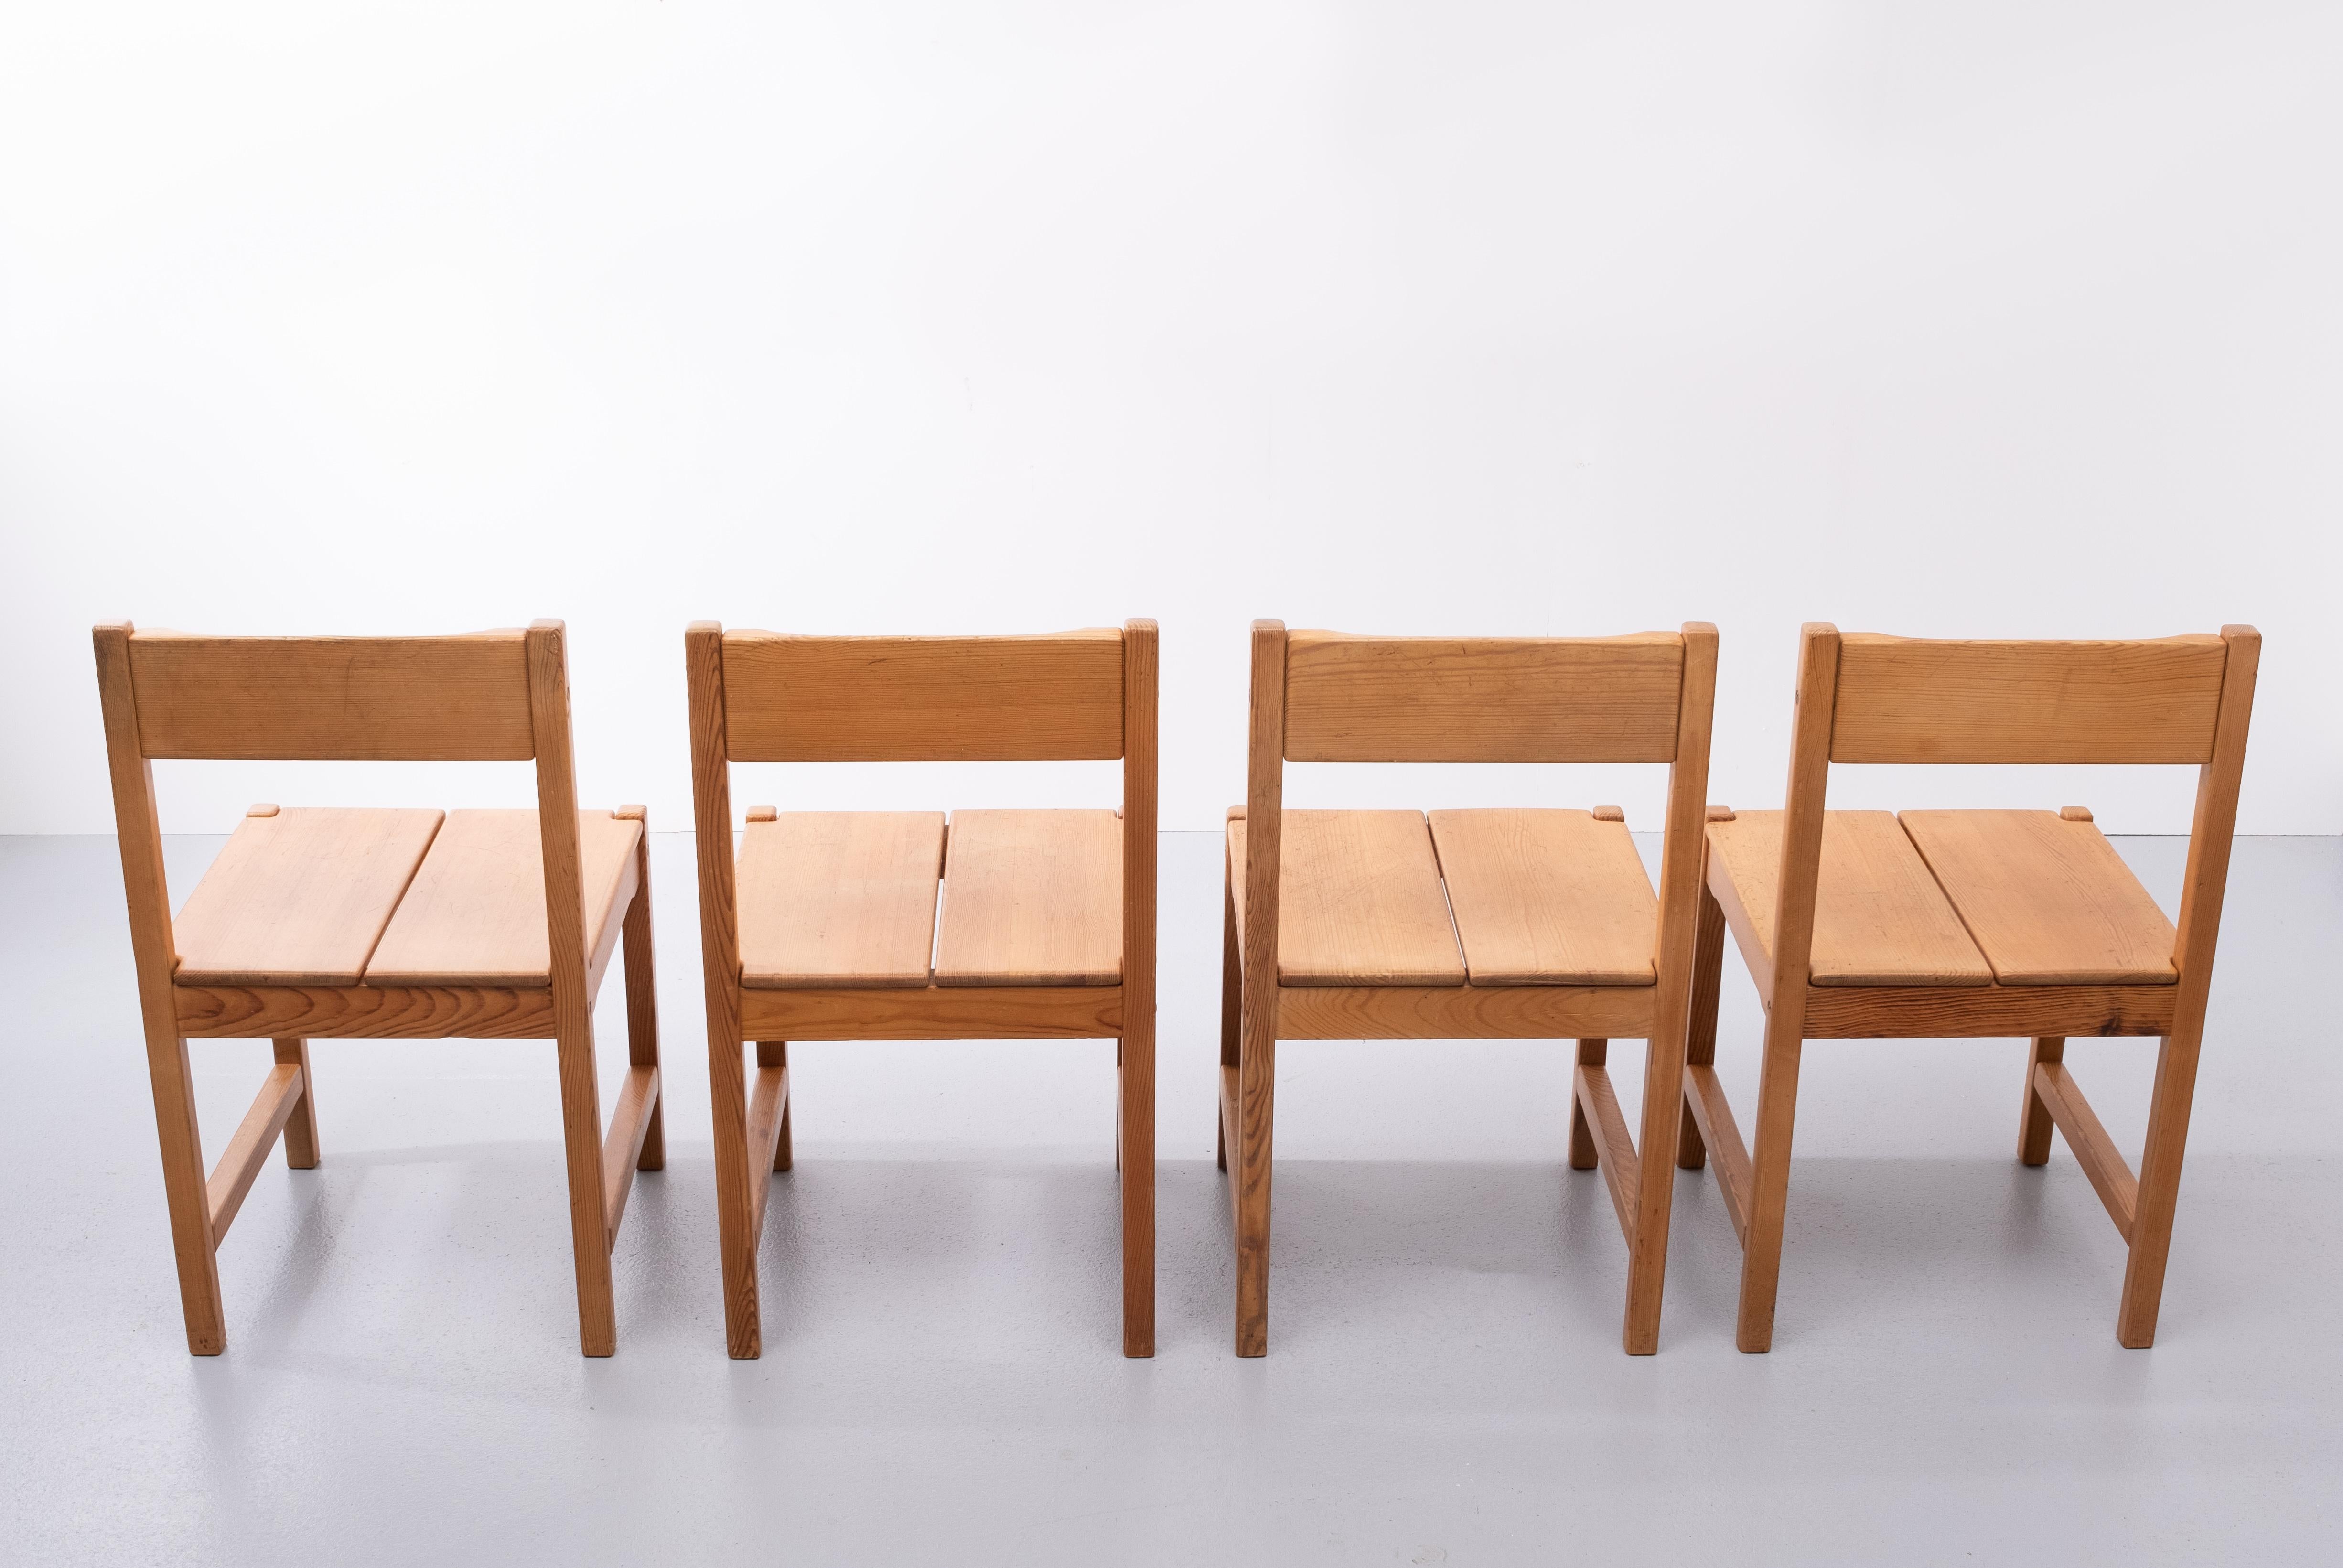 Finnish Tapio Wirkkala Pine Dining Chairs, 1960s For Sale